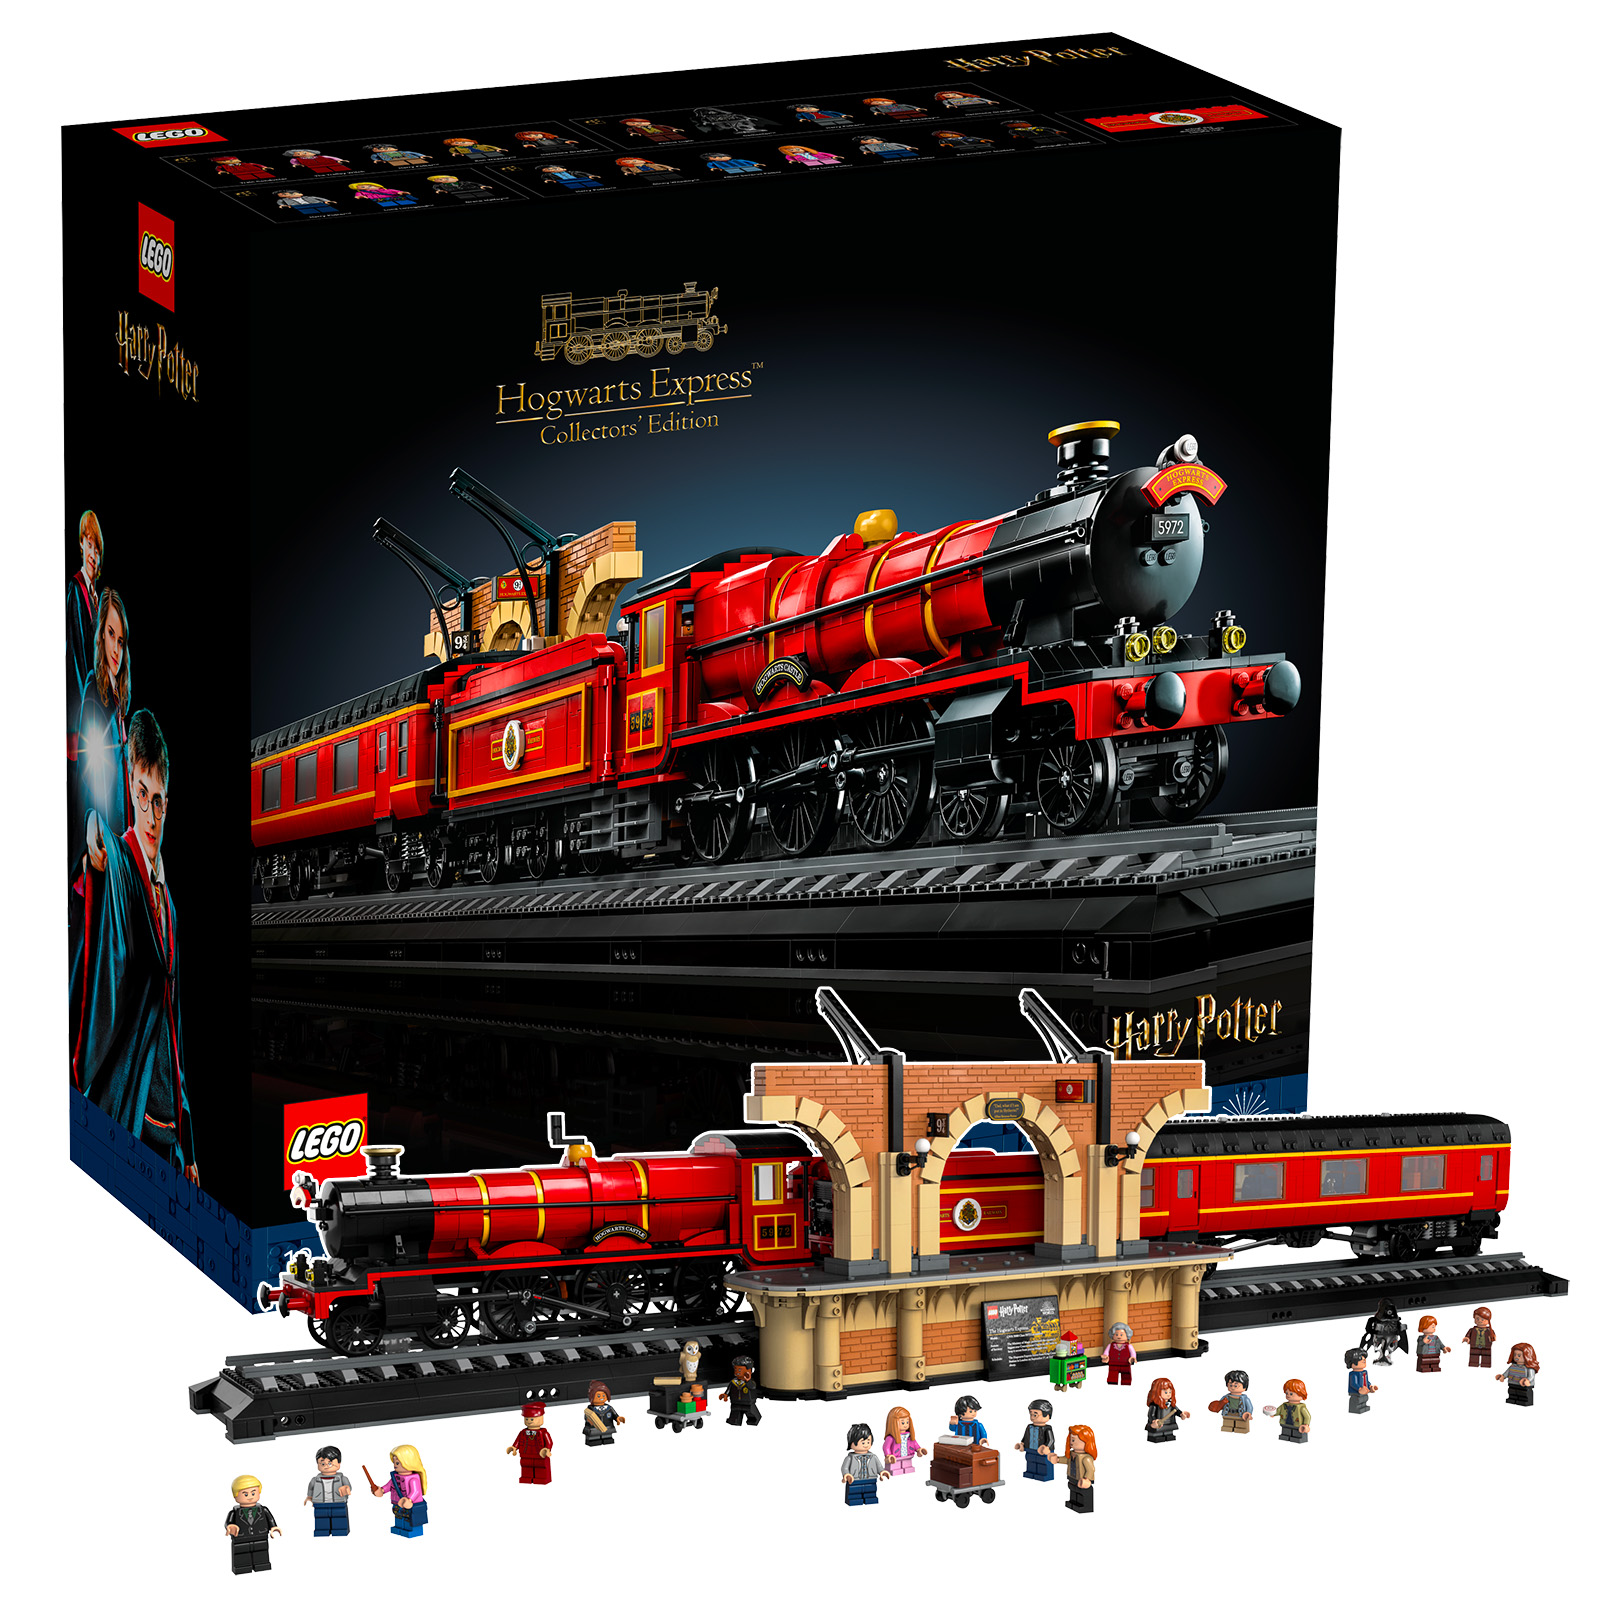 Sul negozio LEGO: il set LEGO Harry Potter 76405 Hogwarts Express Collector's Edition è online